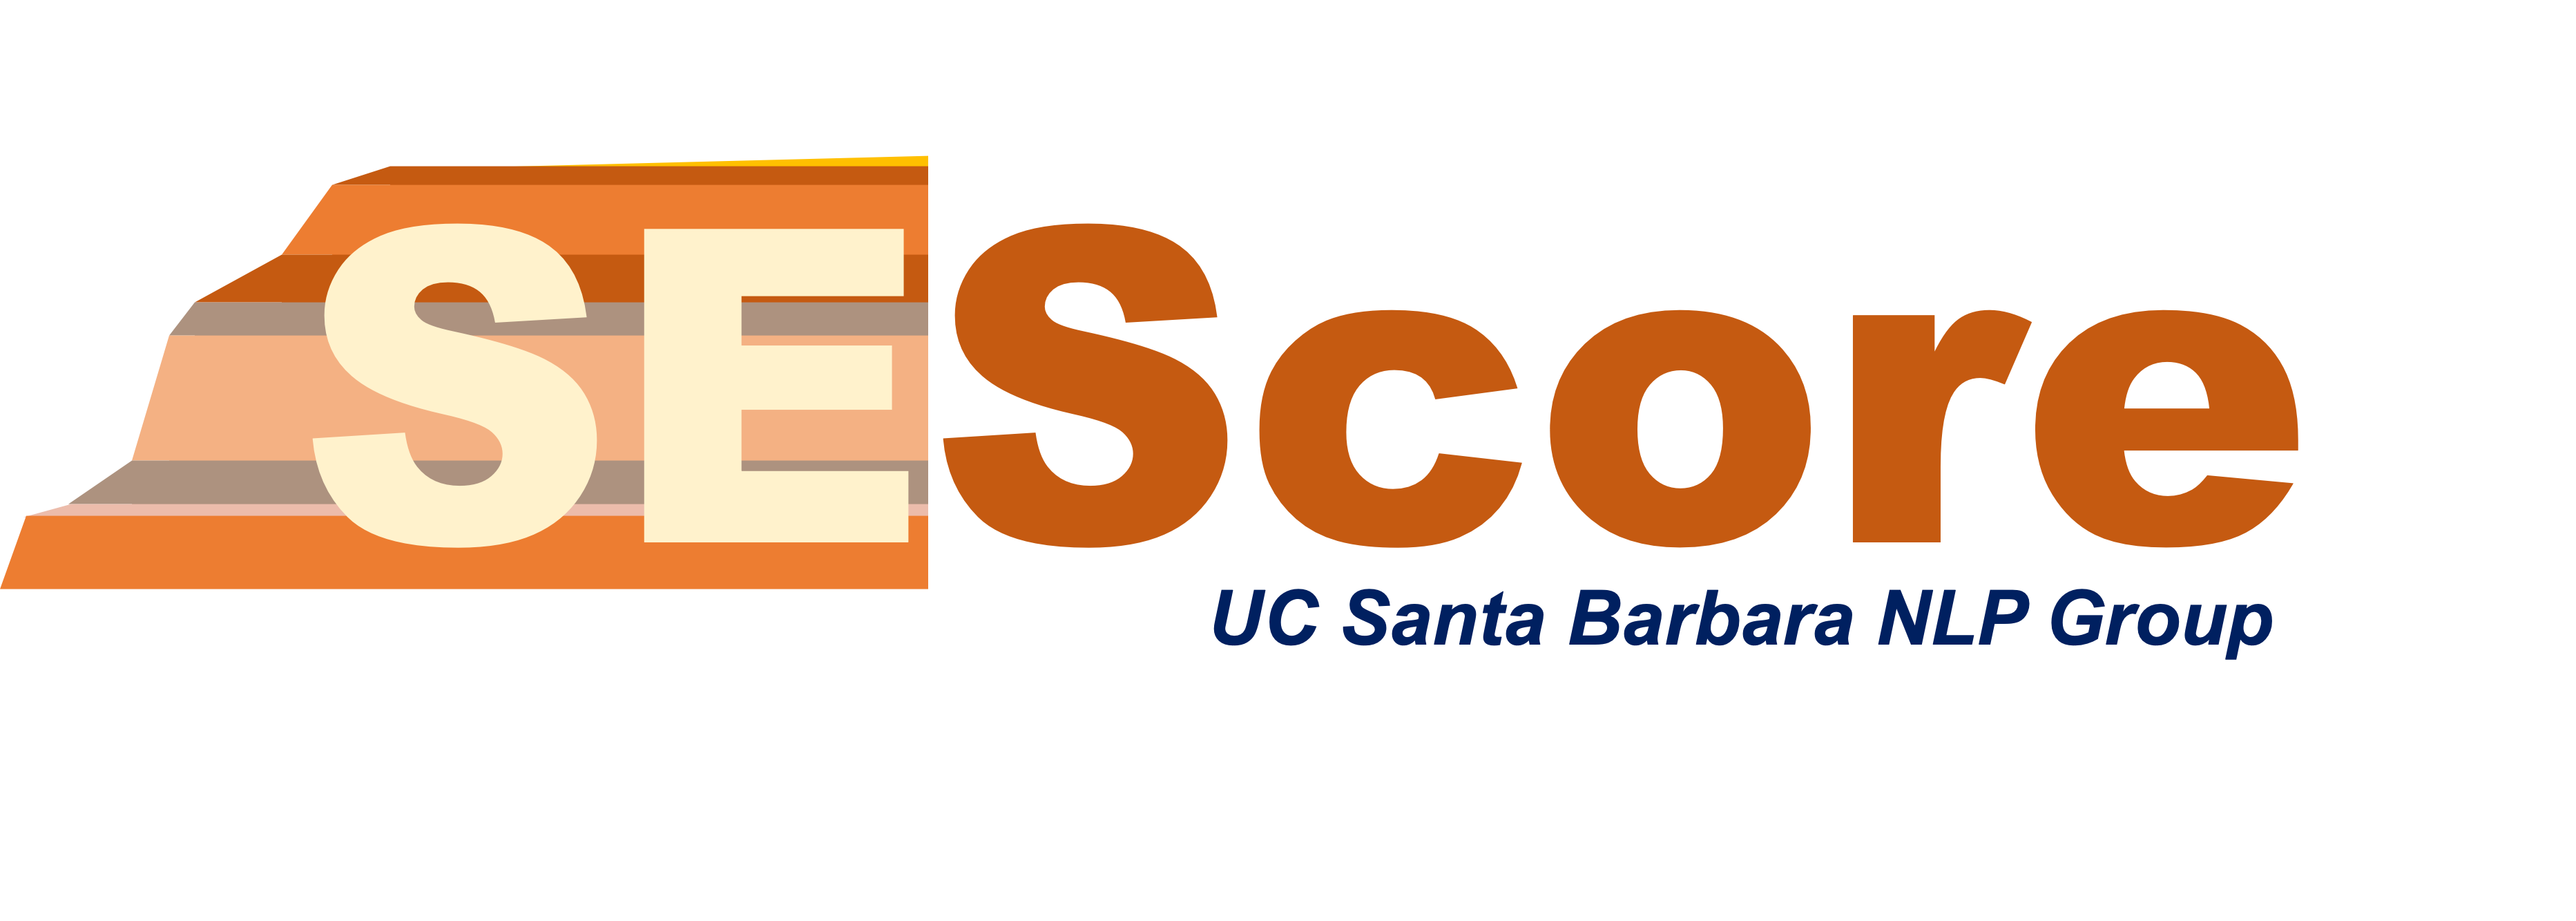 SEScore Logo